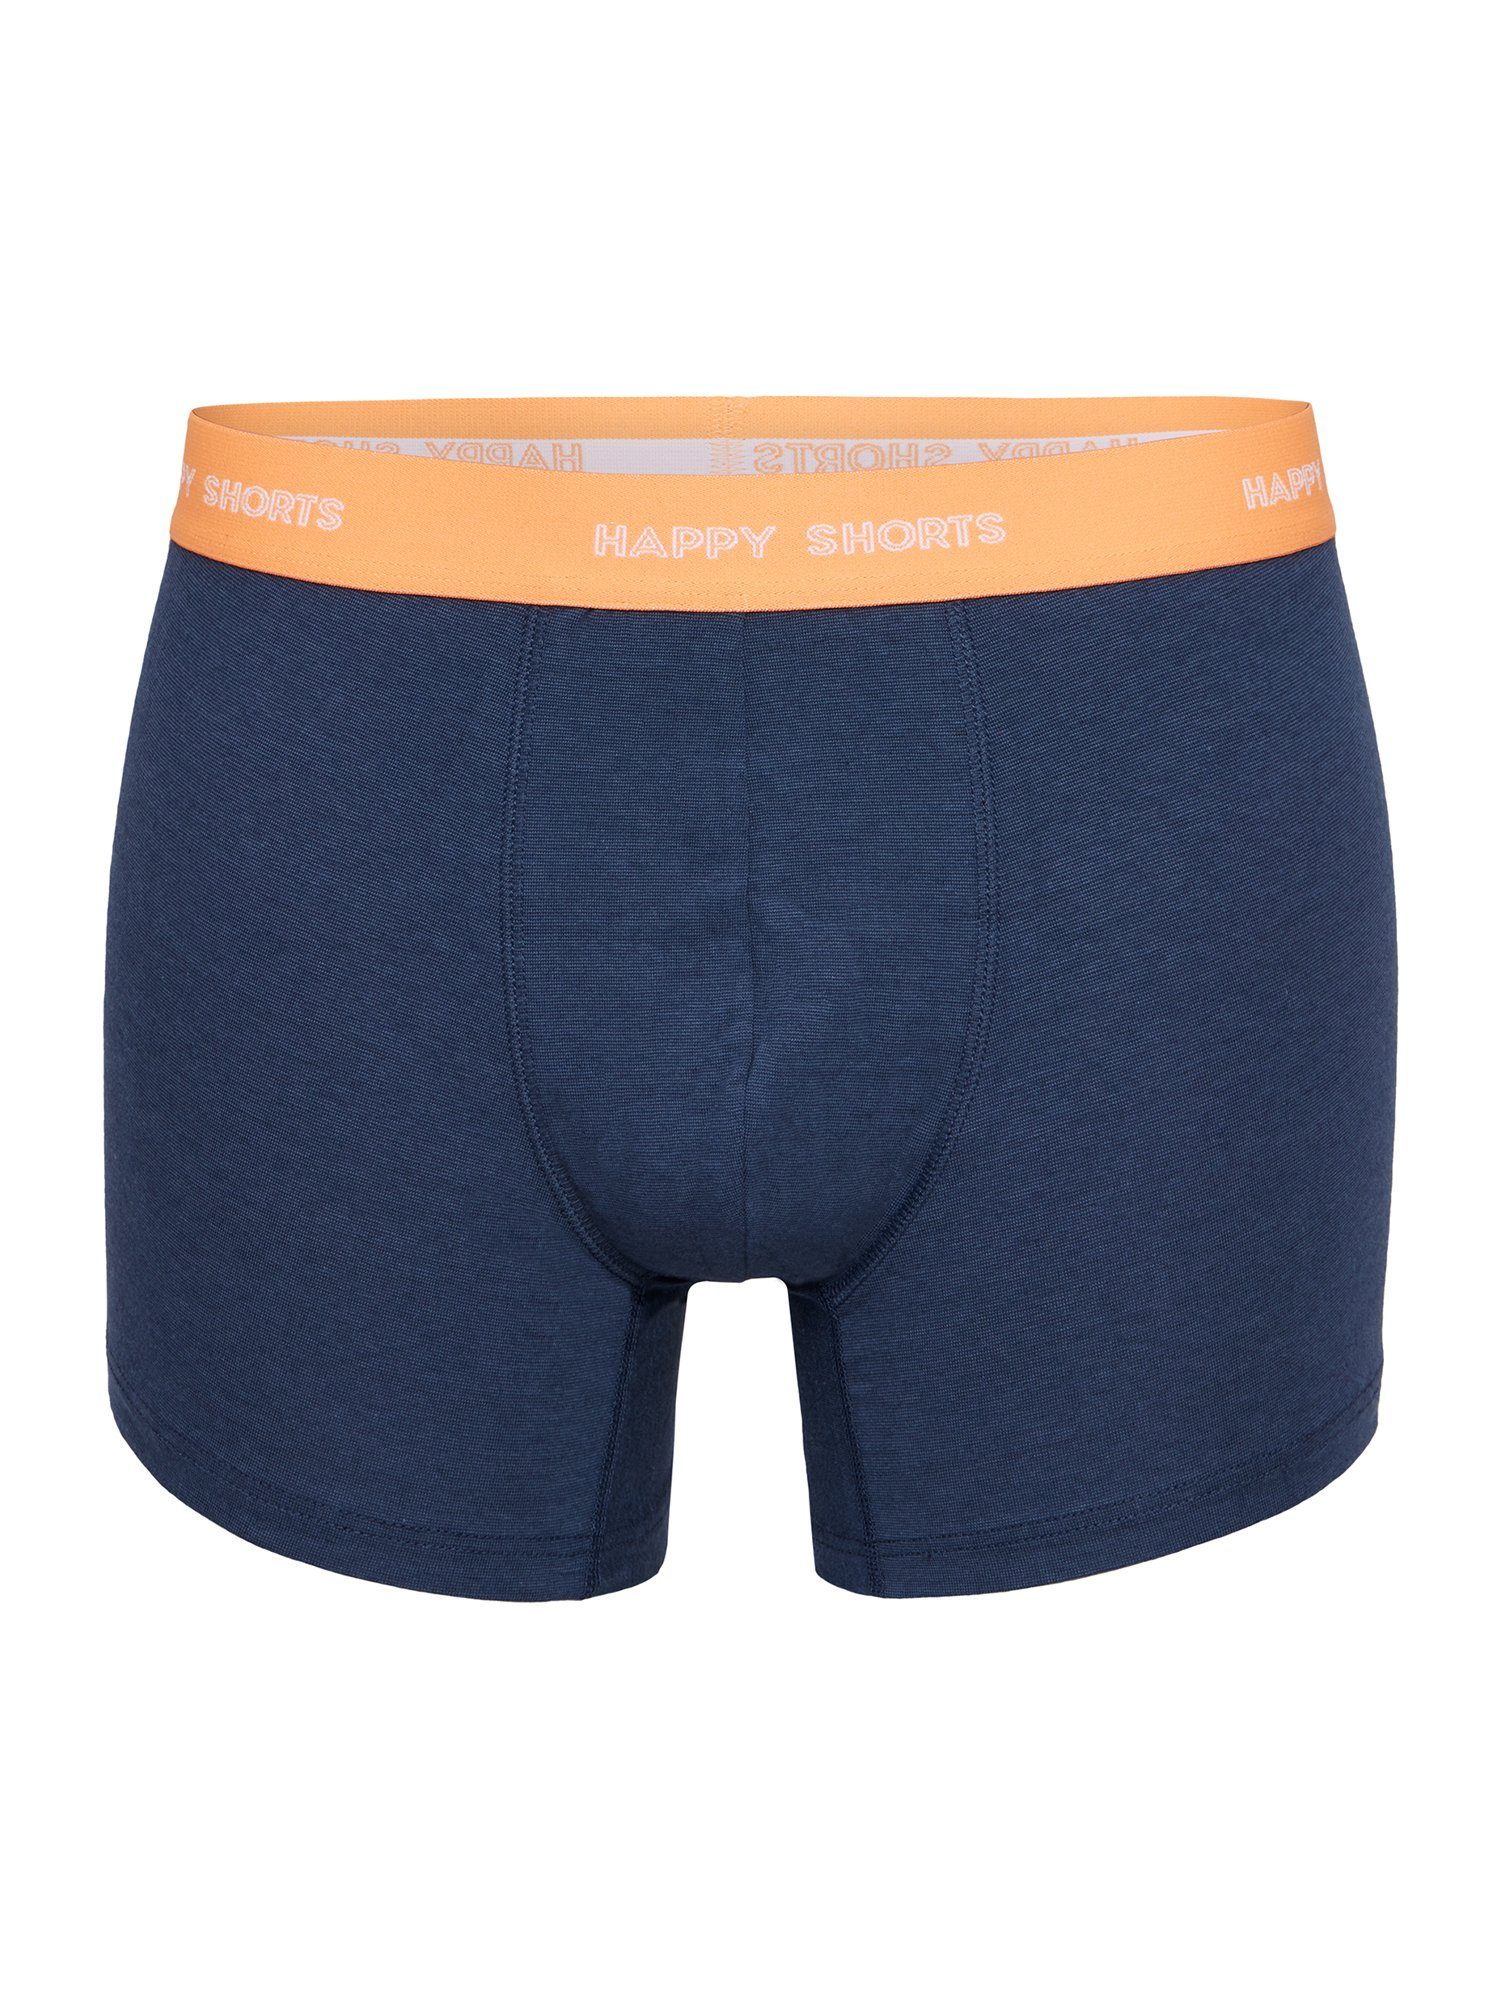 männer Hawaii unterhose (3-St) HAPPY Motive Pants Retro-Boxer SHORTS Retro